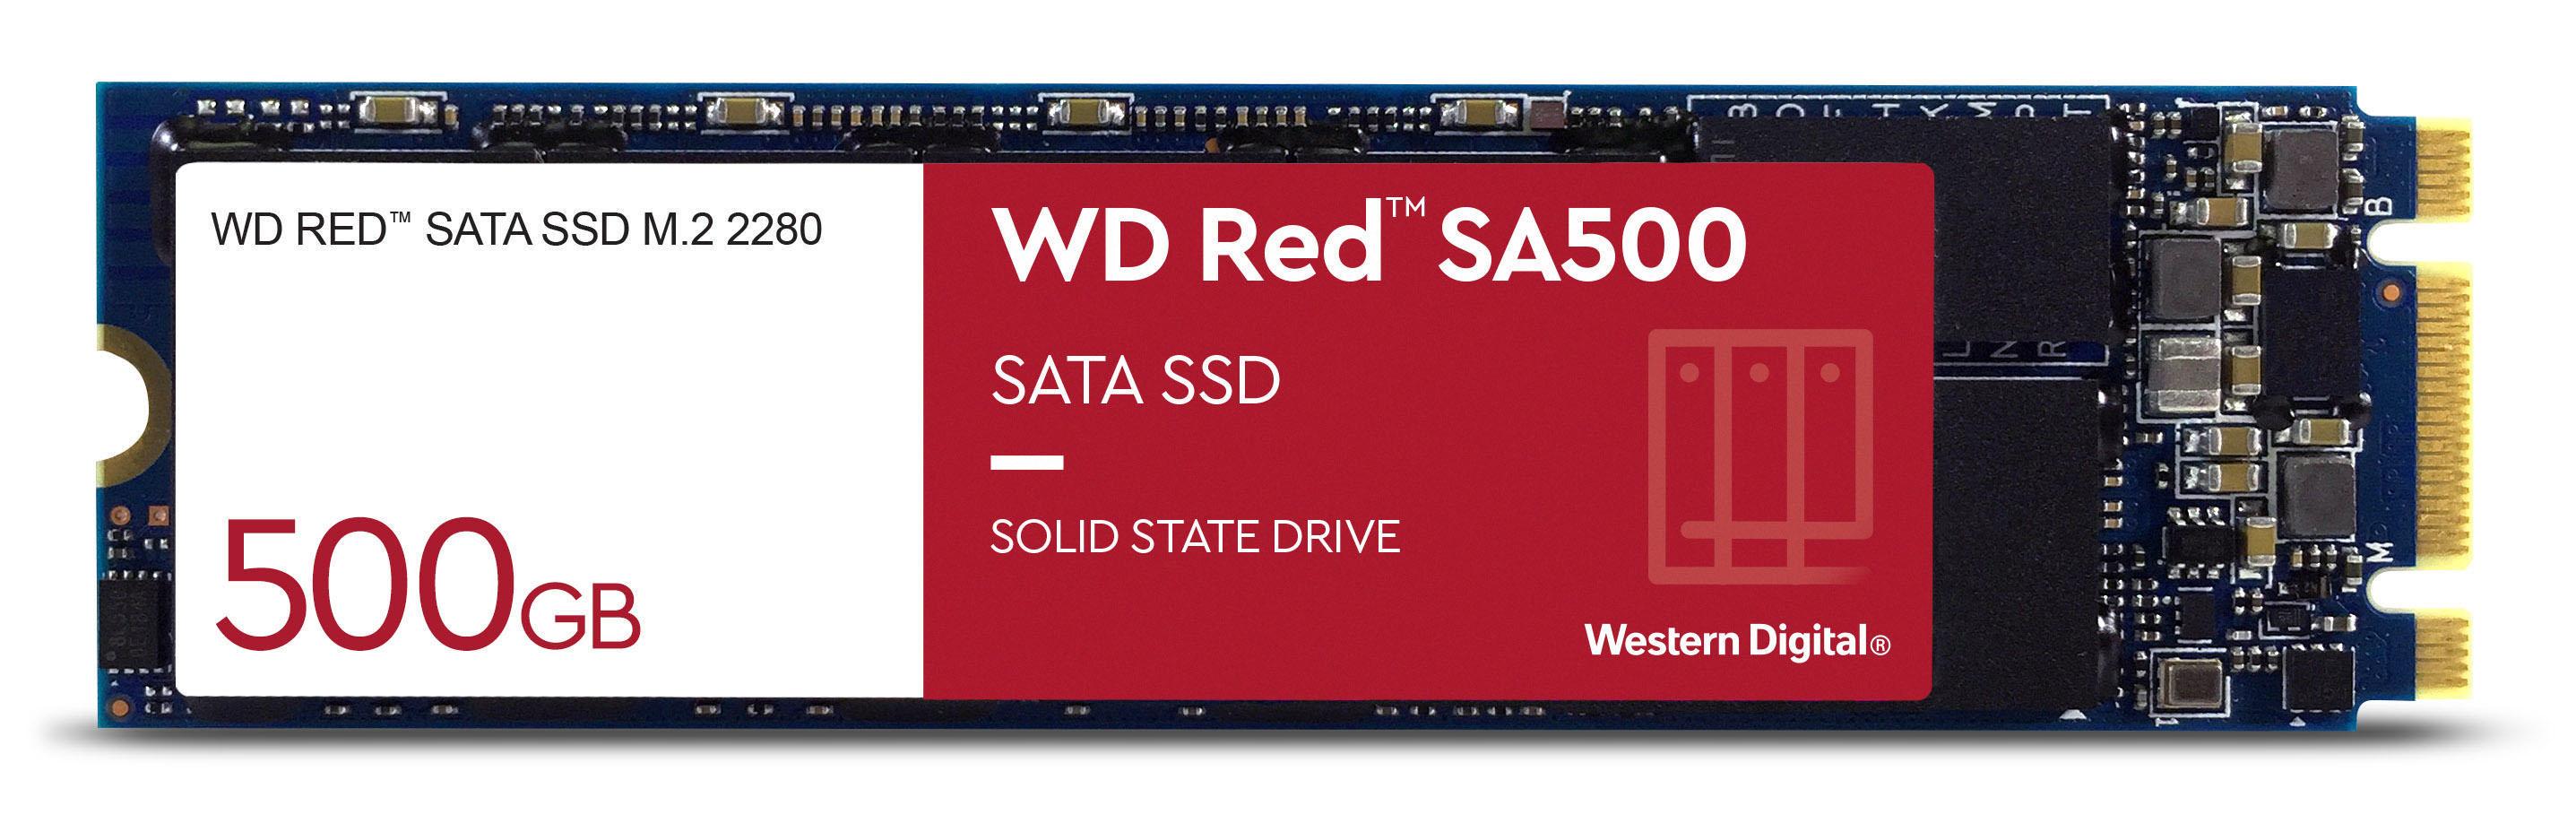 WD Red™ SA500 Speicher Retail, via M.2 intern SATA, 500 GB SSD